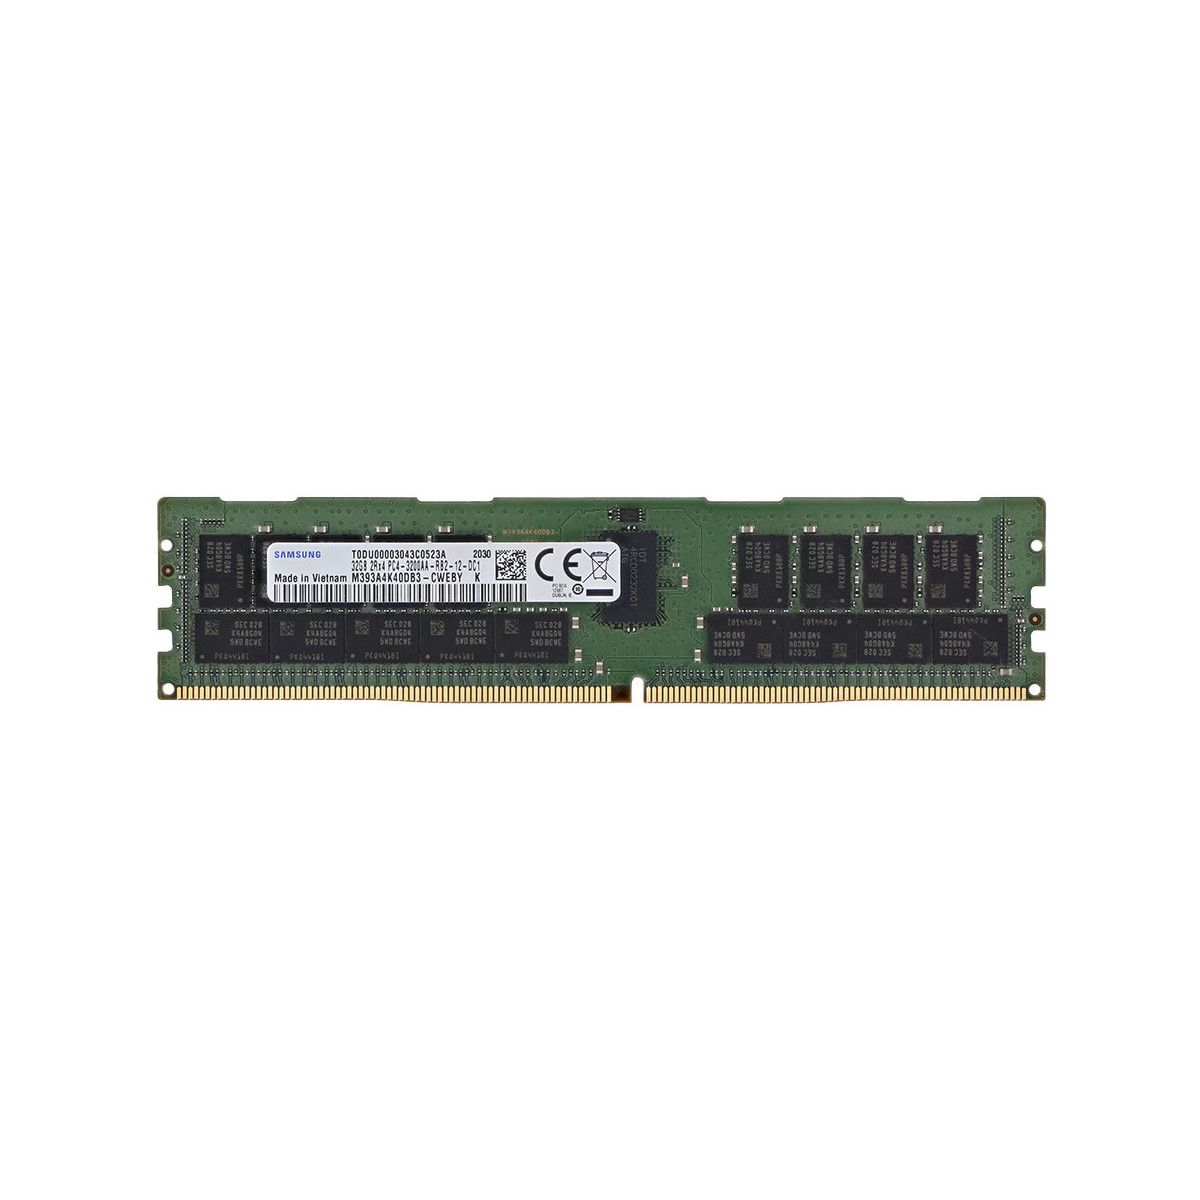 P06033‐H21-MS - Memstar 1x 32GB DDR4-3200 RDIMM PC4-25600R - Mem-star Compatible OEM Memory 1 - Memstar 